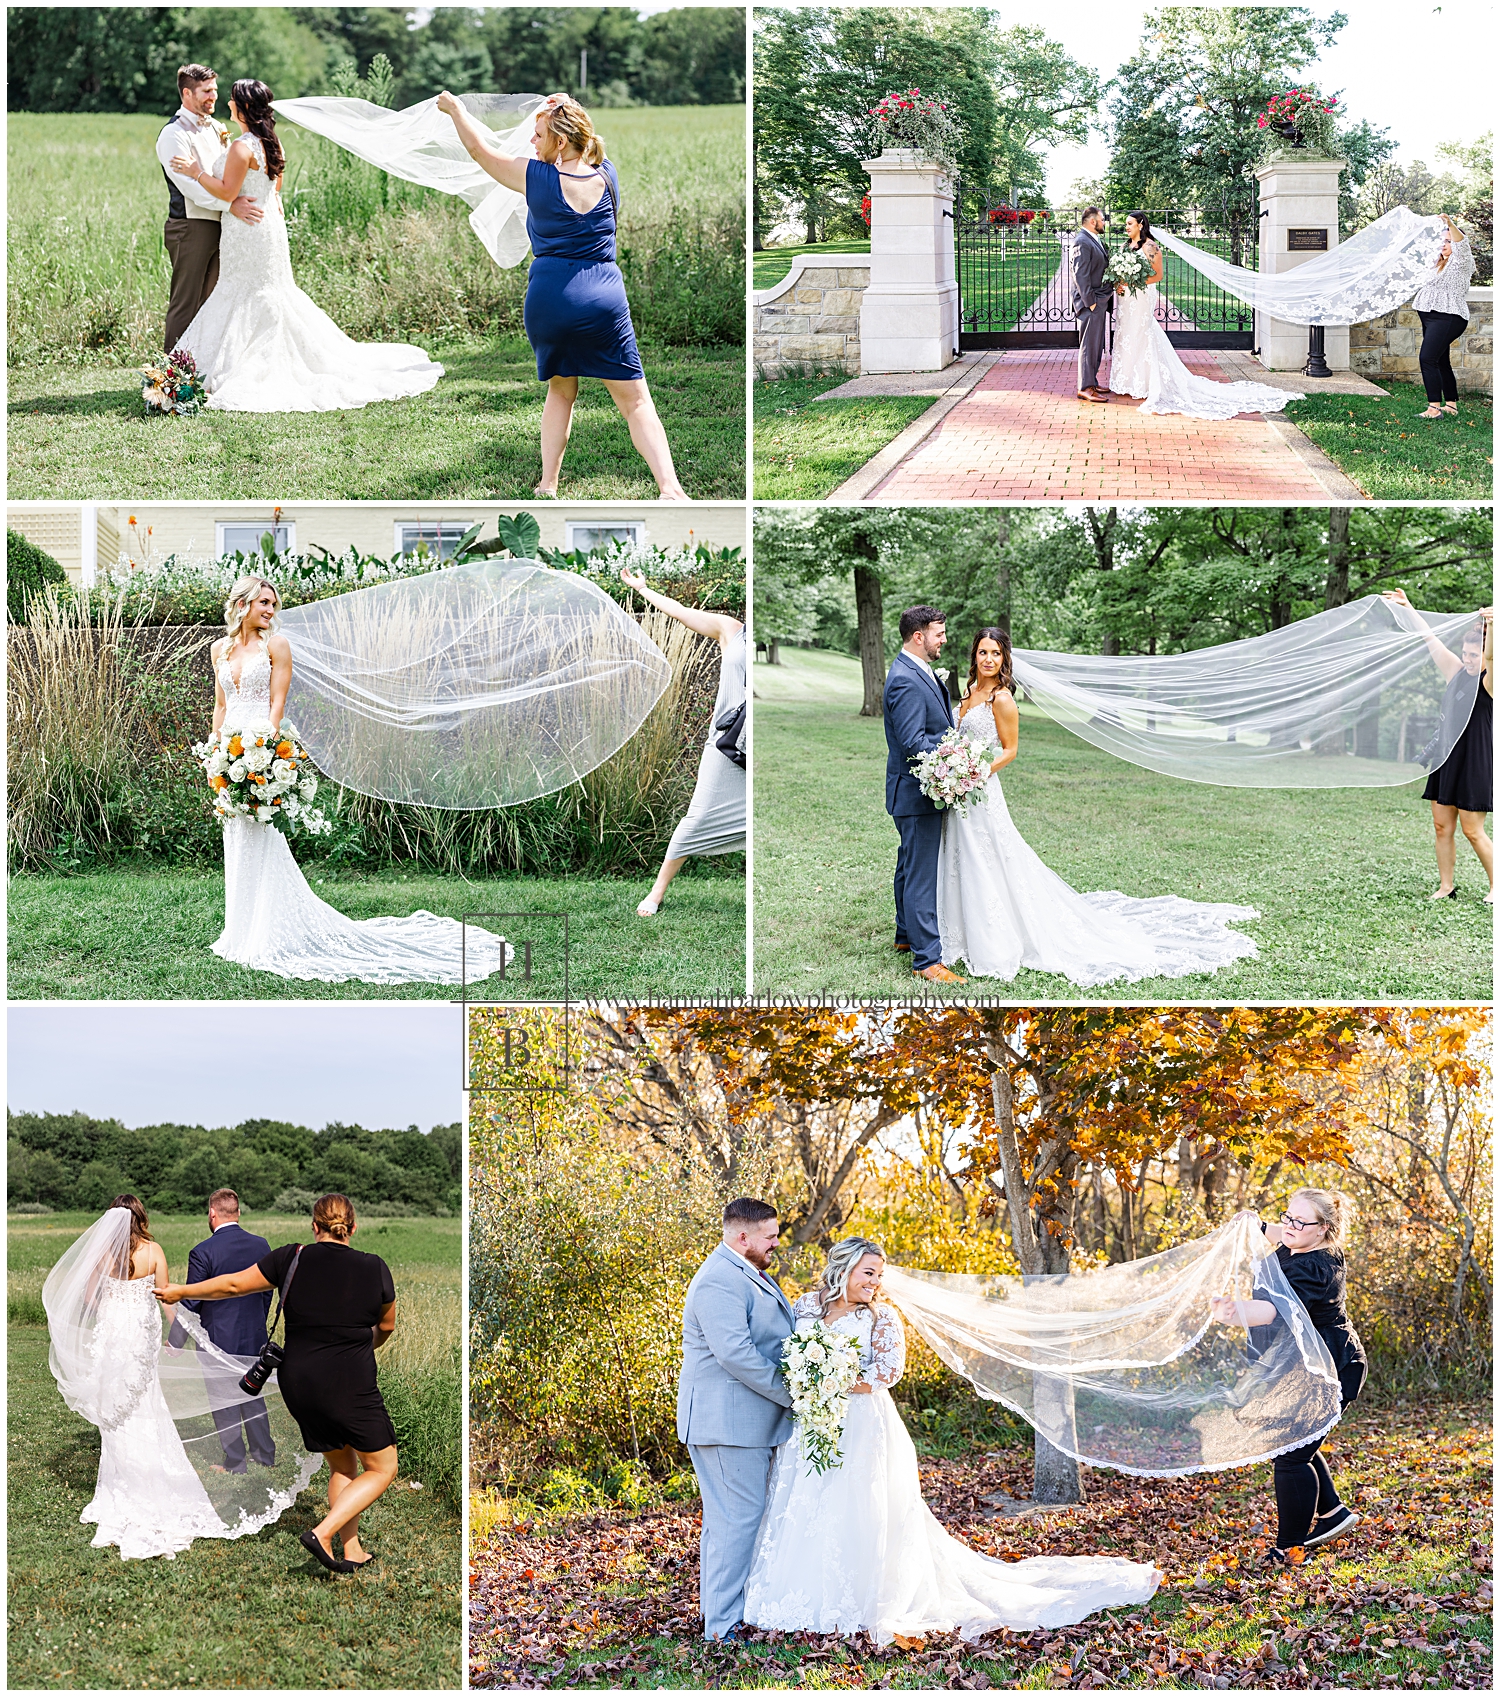 Wedding photographers throw veils in collage of wedding photos